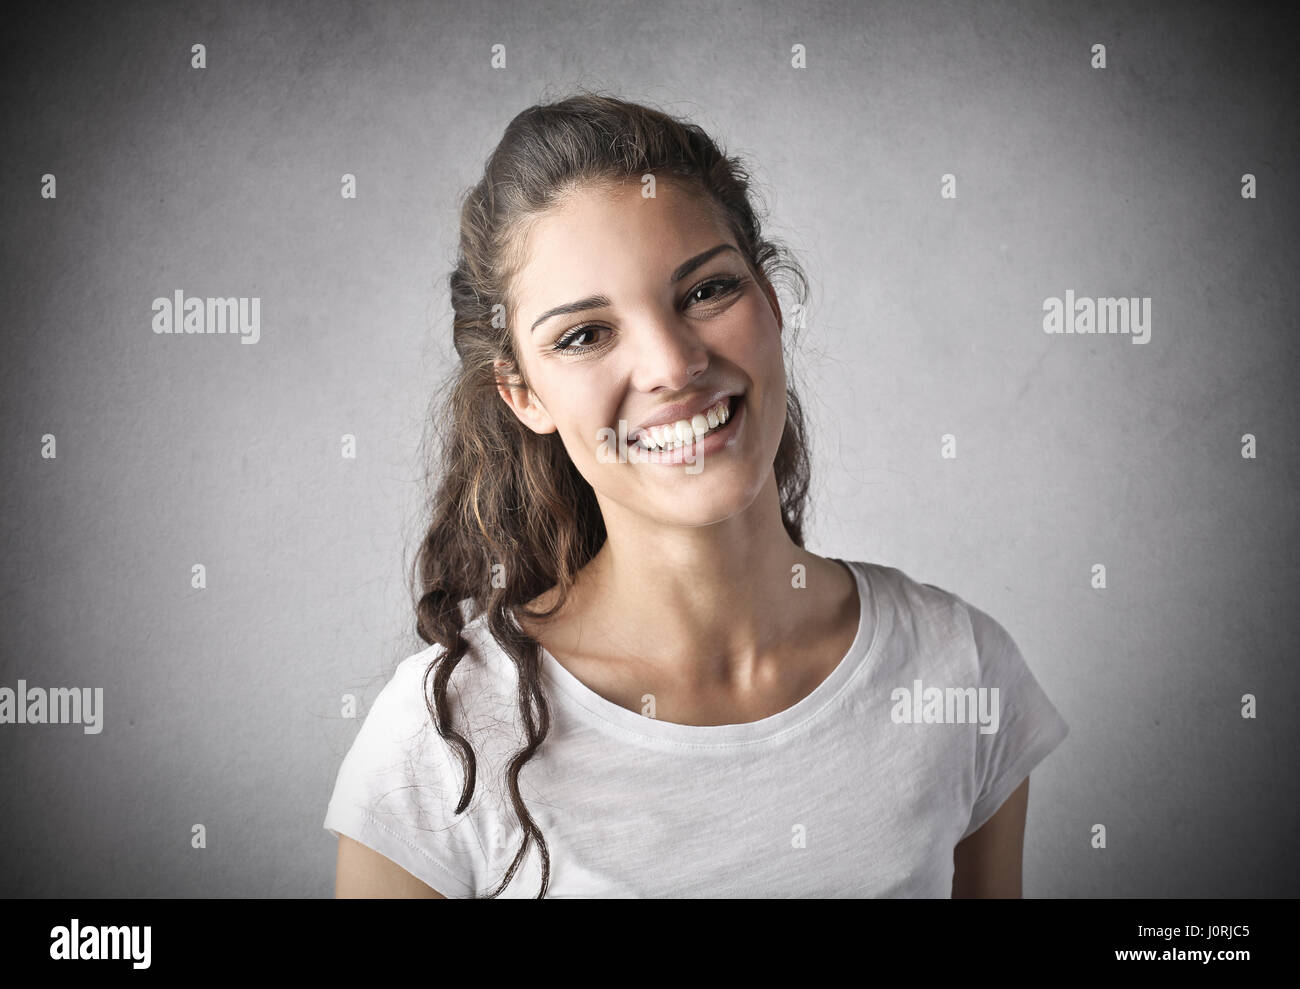 Brunette woman smiling inside Stock Photo